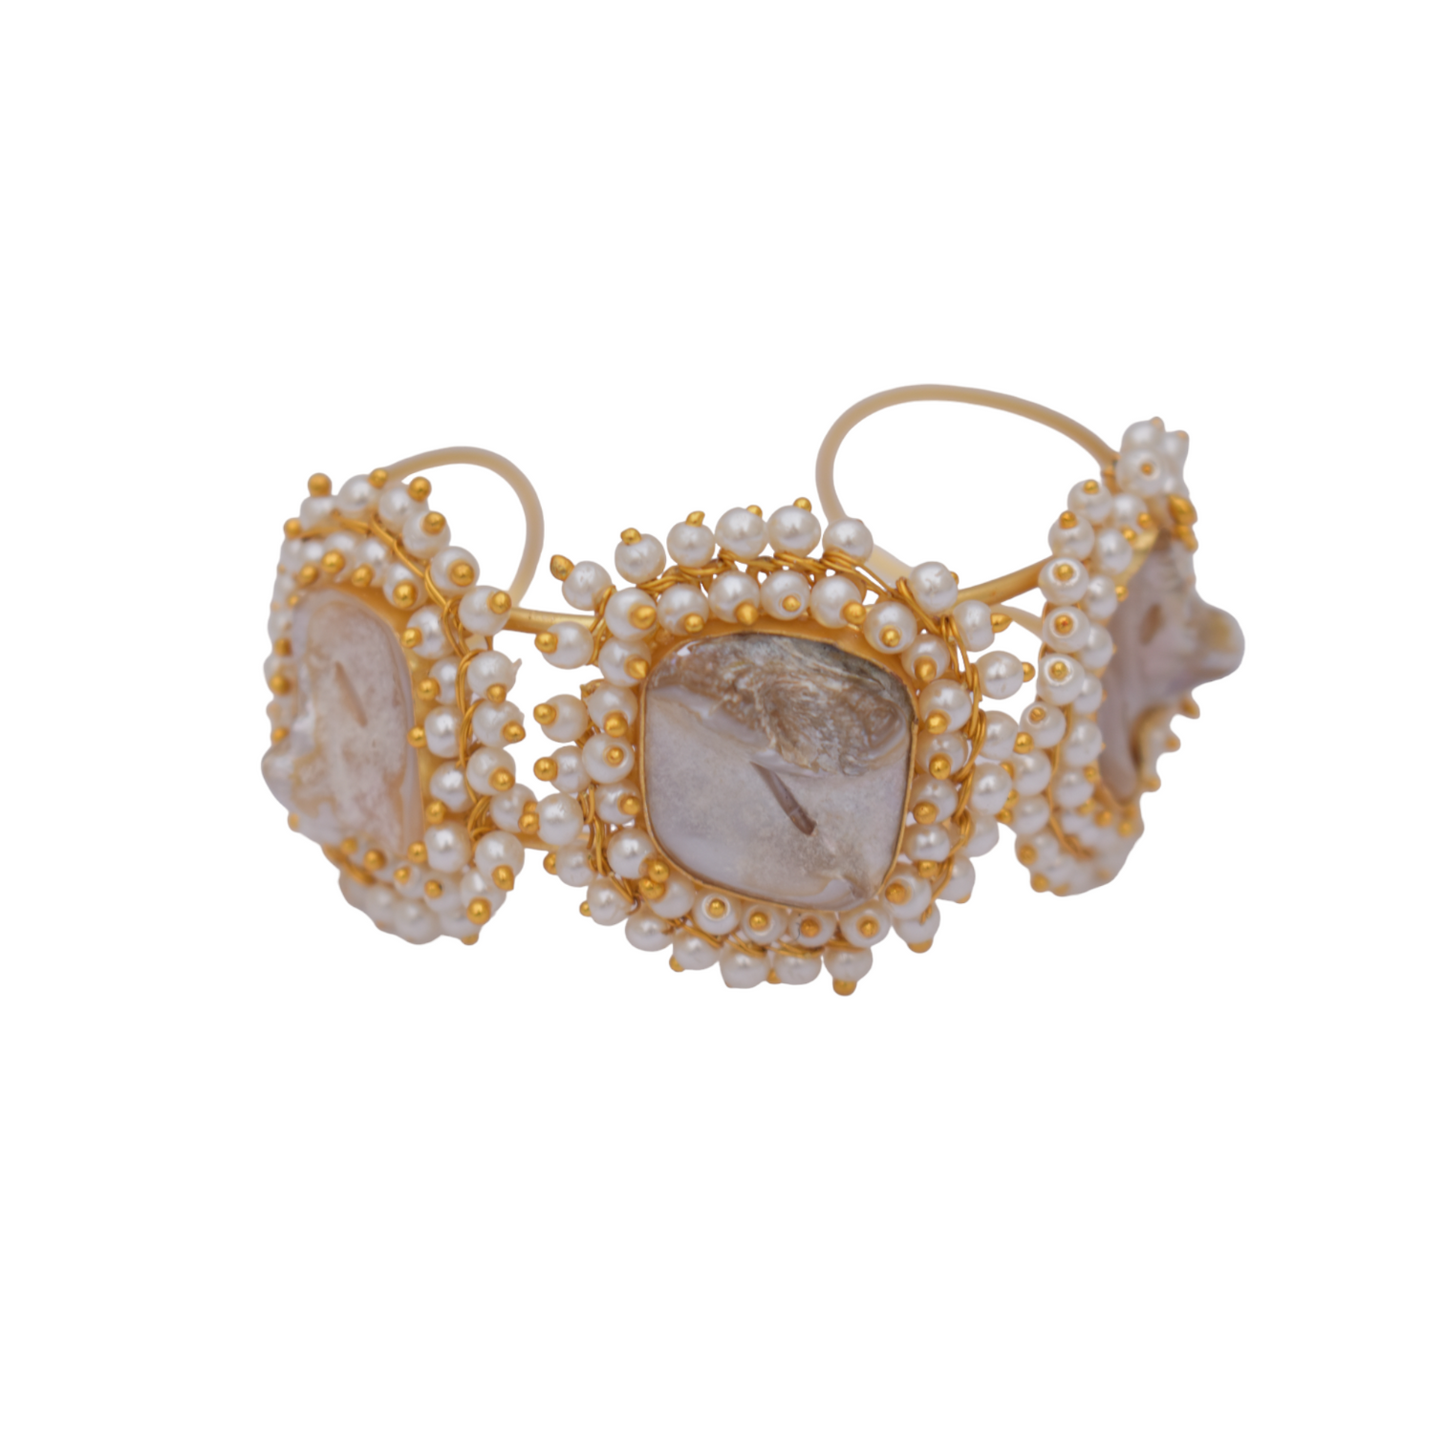 Handmade pearl goldplated brass adjustable bangle